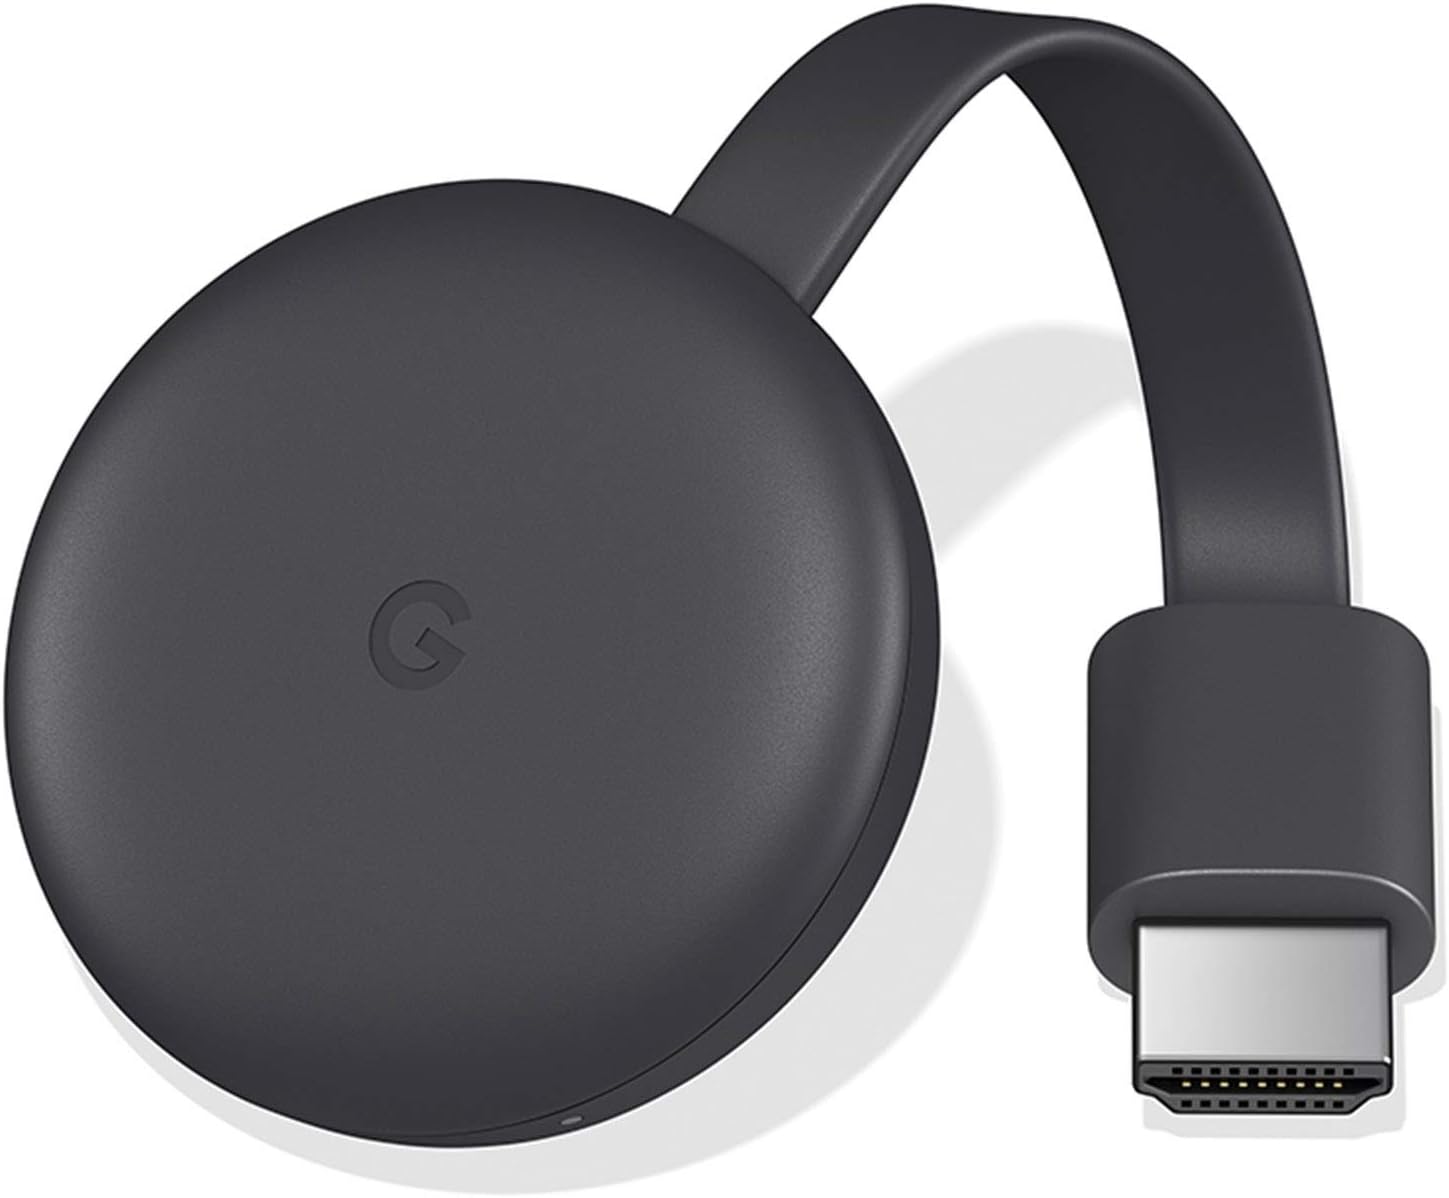 Google Chromecast (3rd Generation) Media Streamer - Black - $30